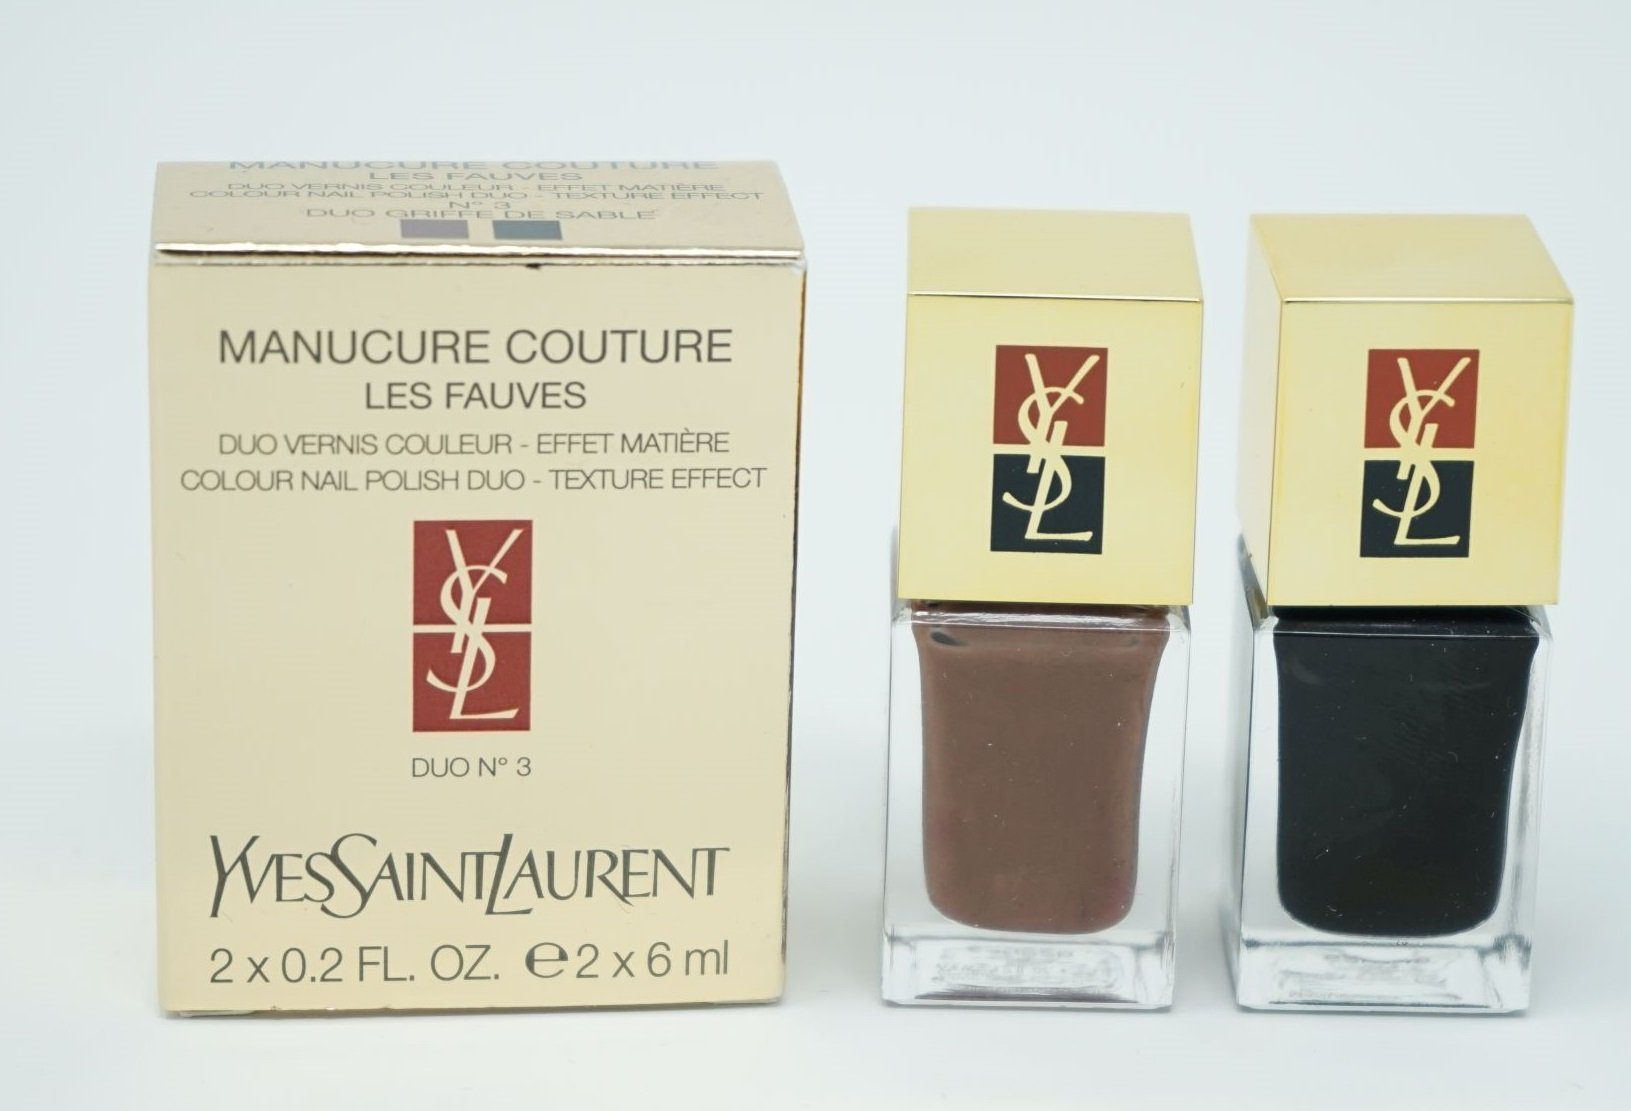 YVES SAINT LAURENT Nagellack Yves Saint Laurent Manucure Couture Nagellack Duo-Nail No3 | Nagellacke